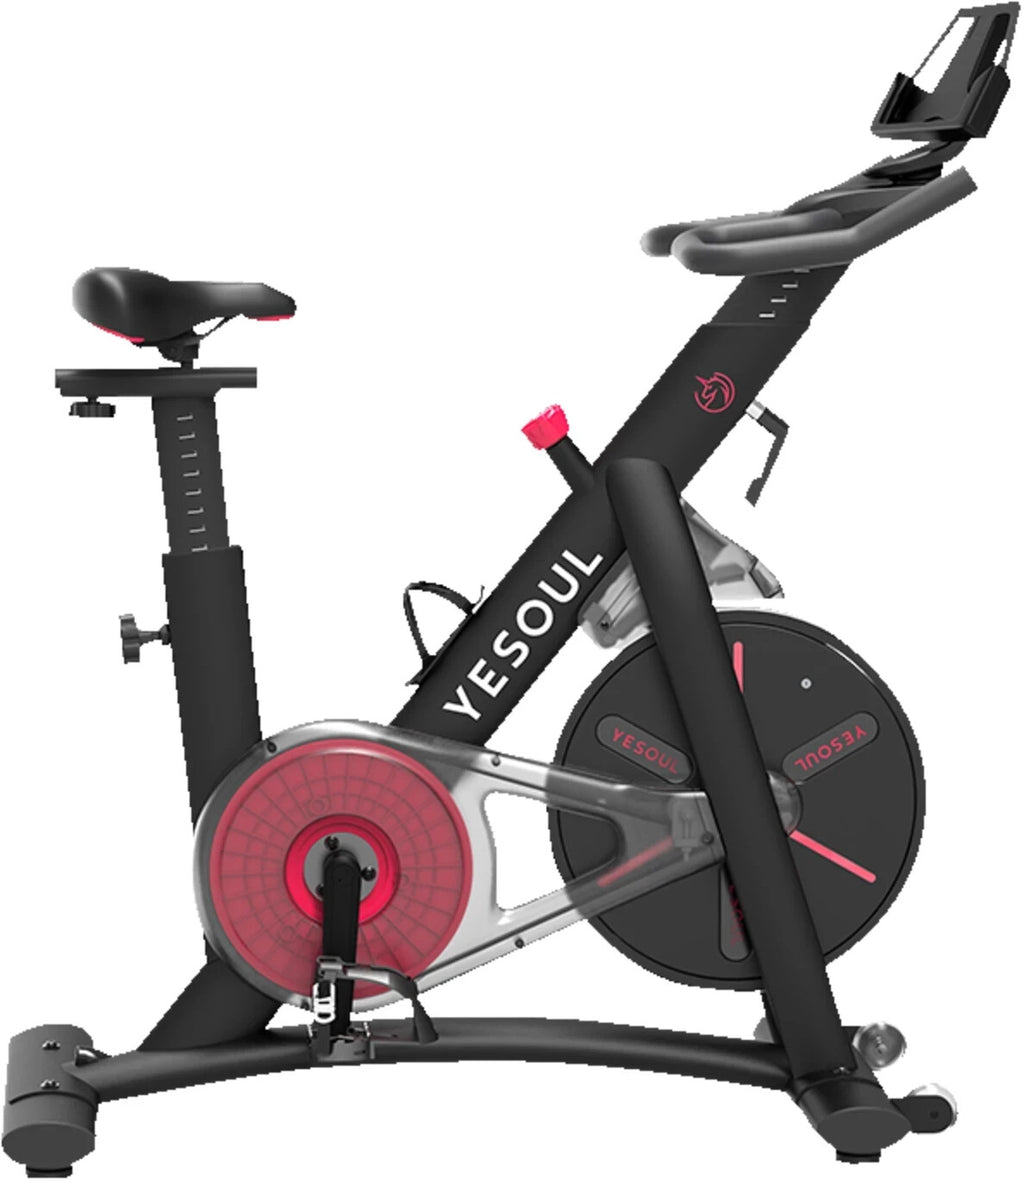 Yesoul Smart S3 Indoor Spin Bike | Black